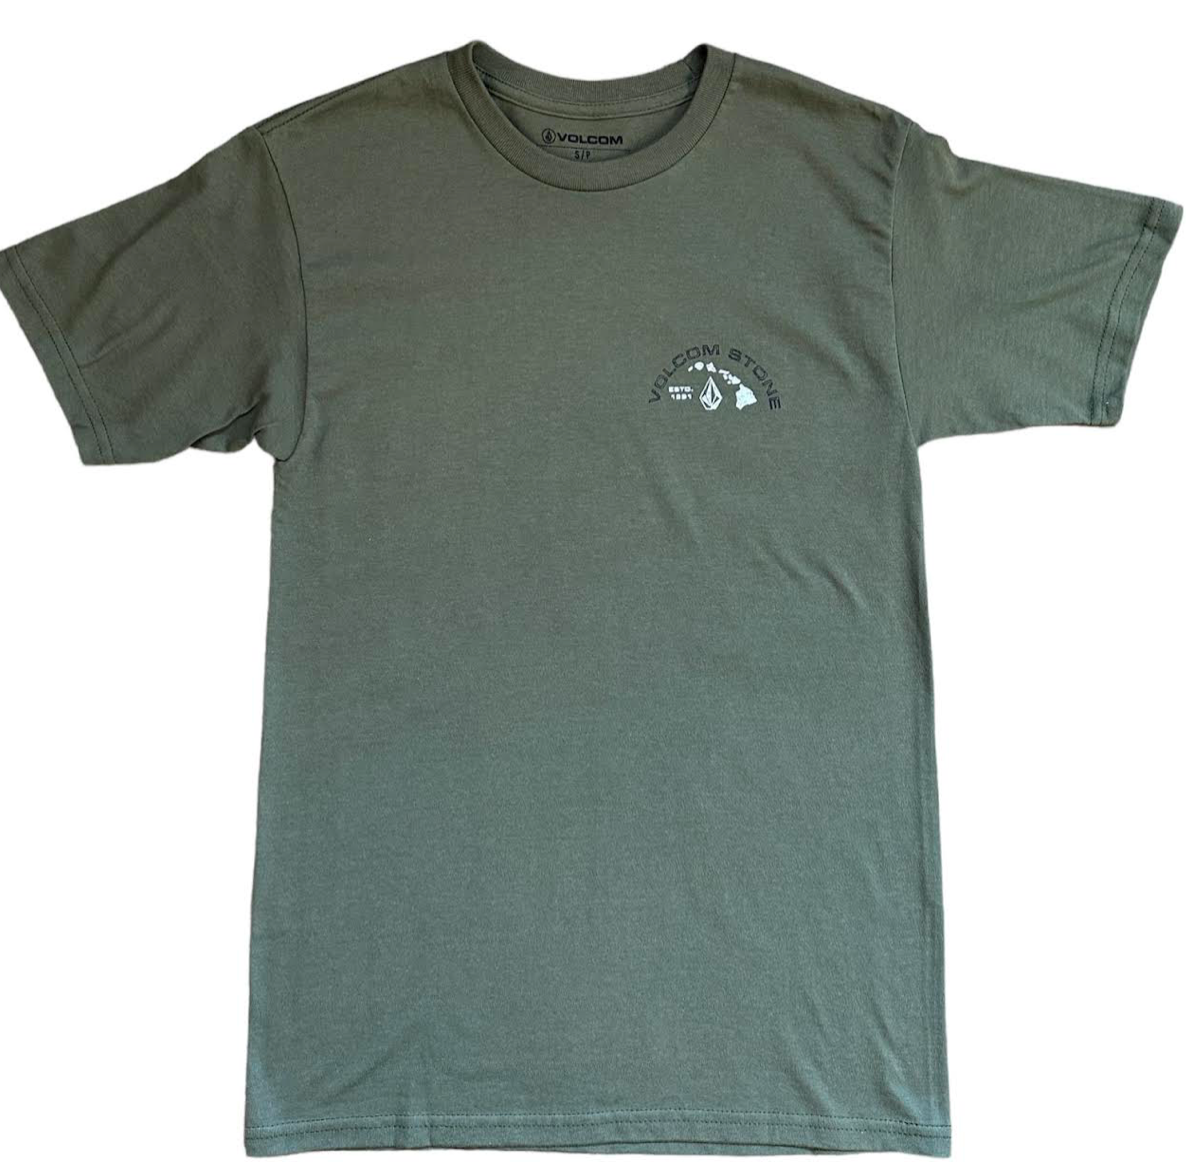 Rip Code Maui T-Shirt